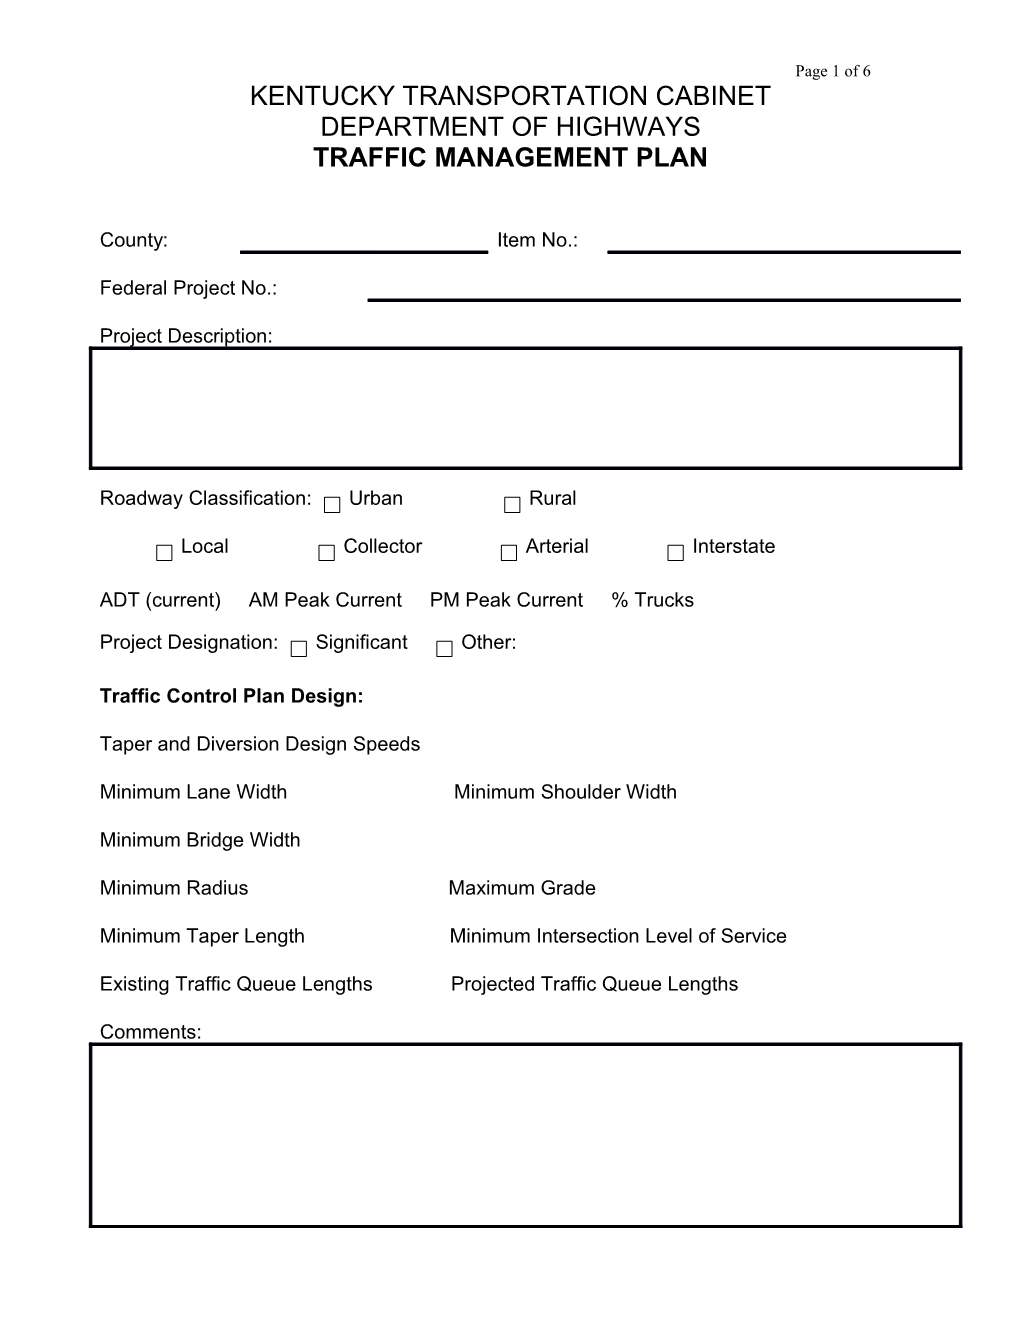 Traffic Management Plan Form 03-08-10